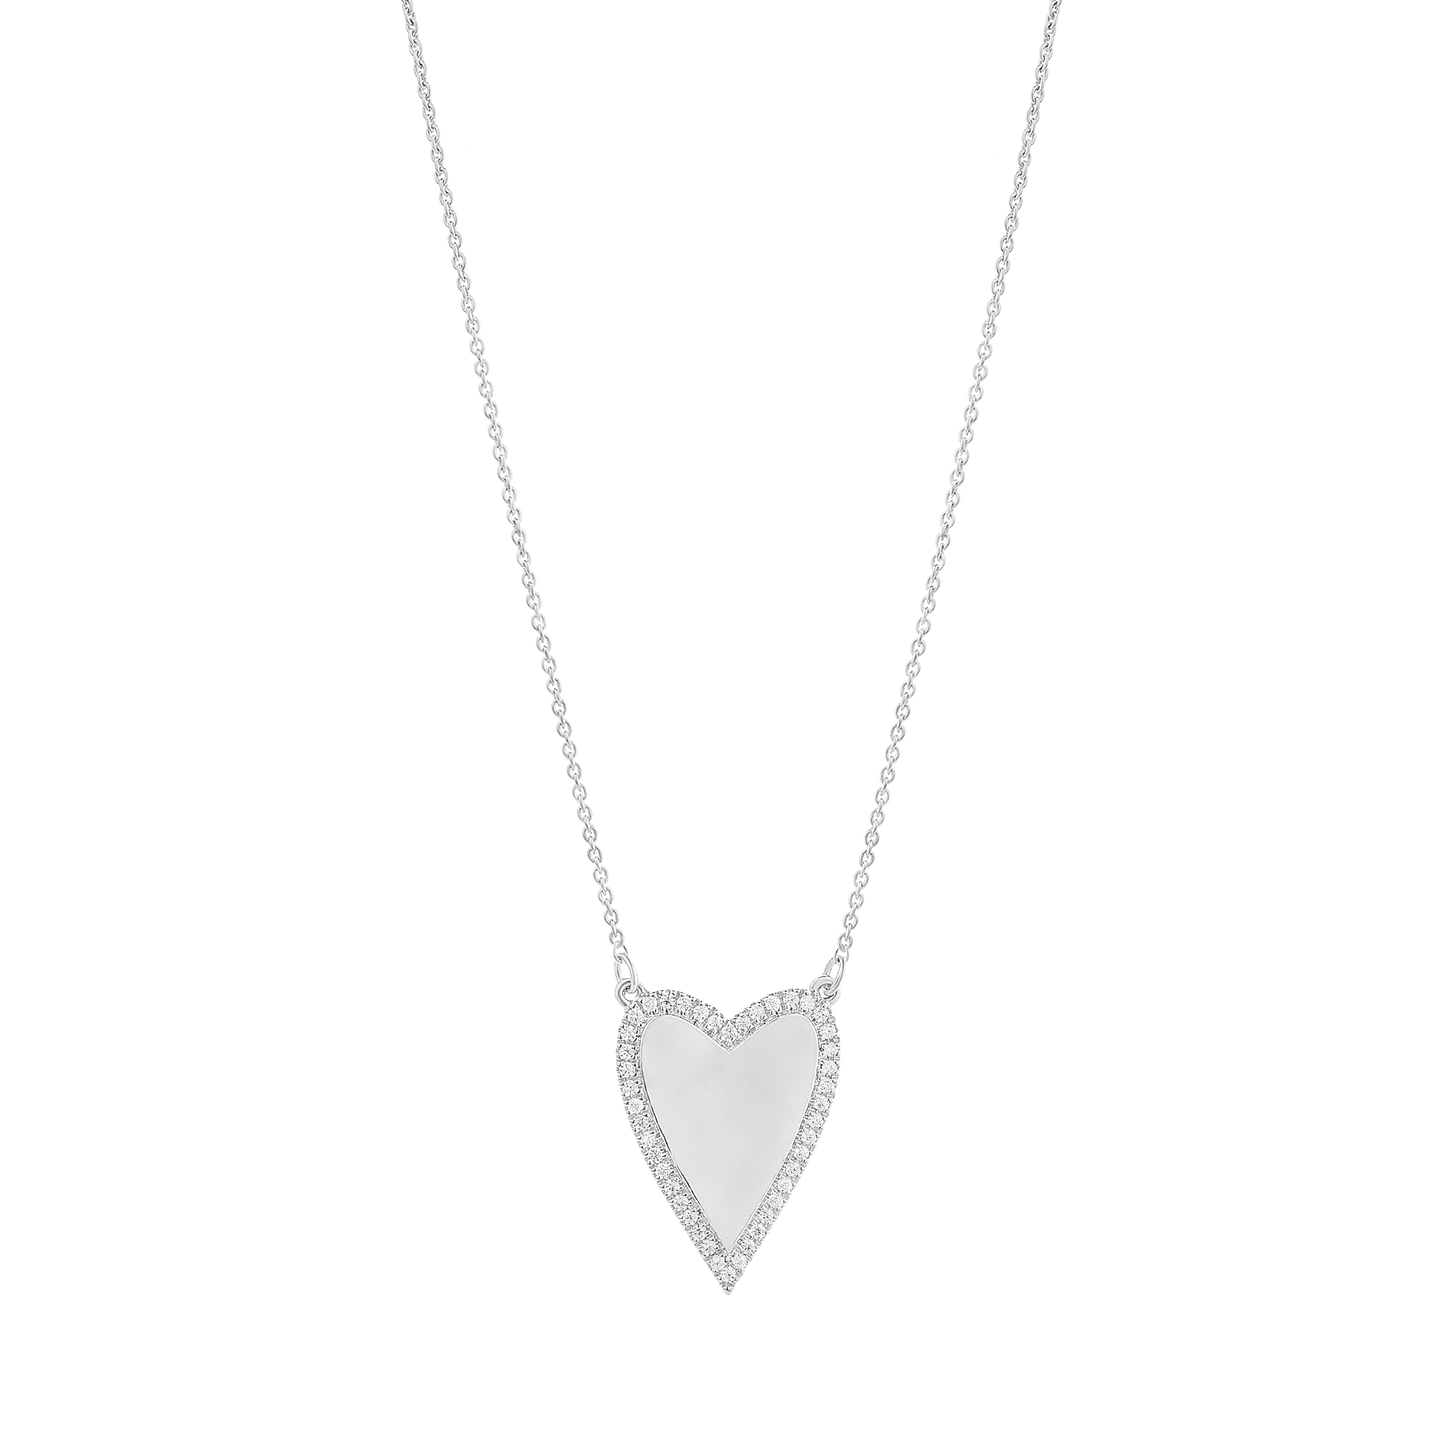 Outlined Heart Diamond Necklace - 18K Gold Vermeil Necklaces magal-dev 